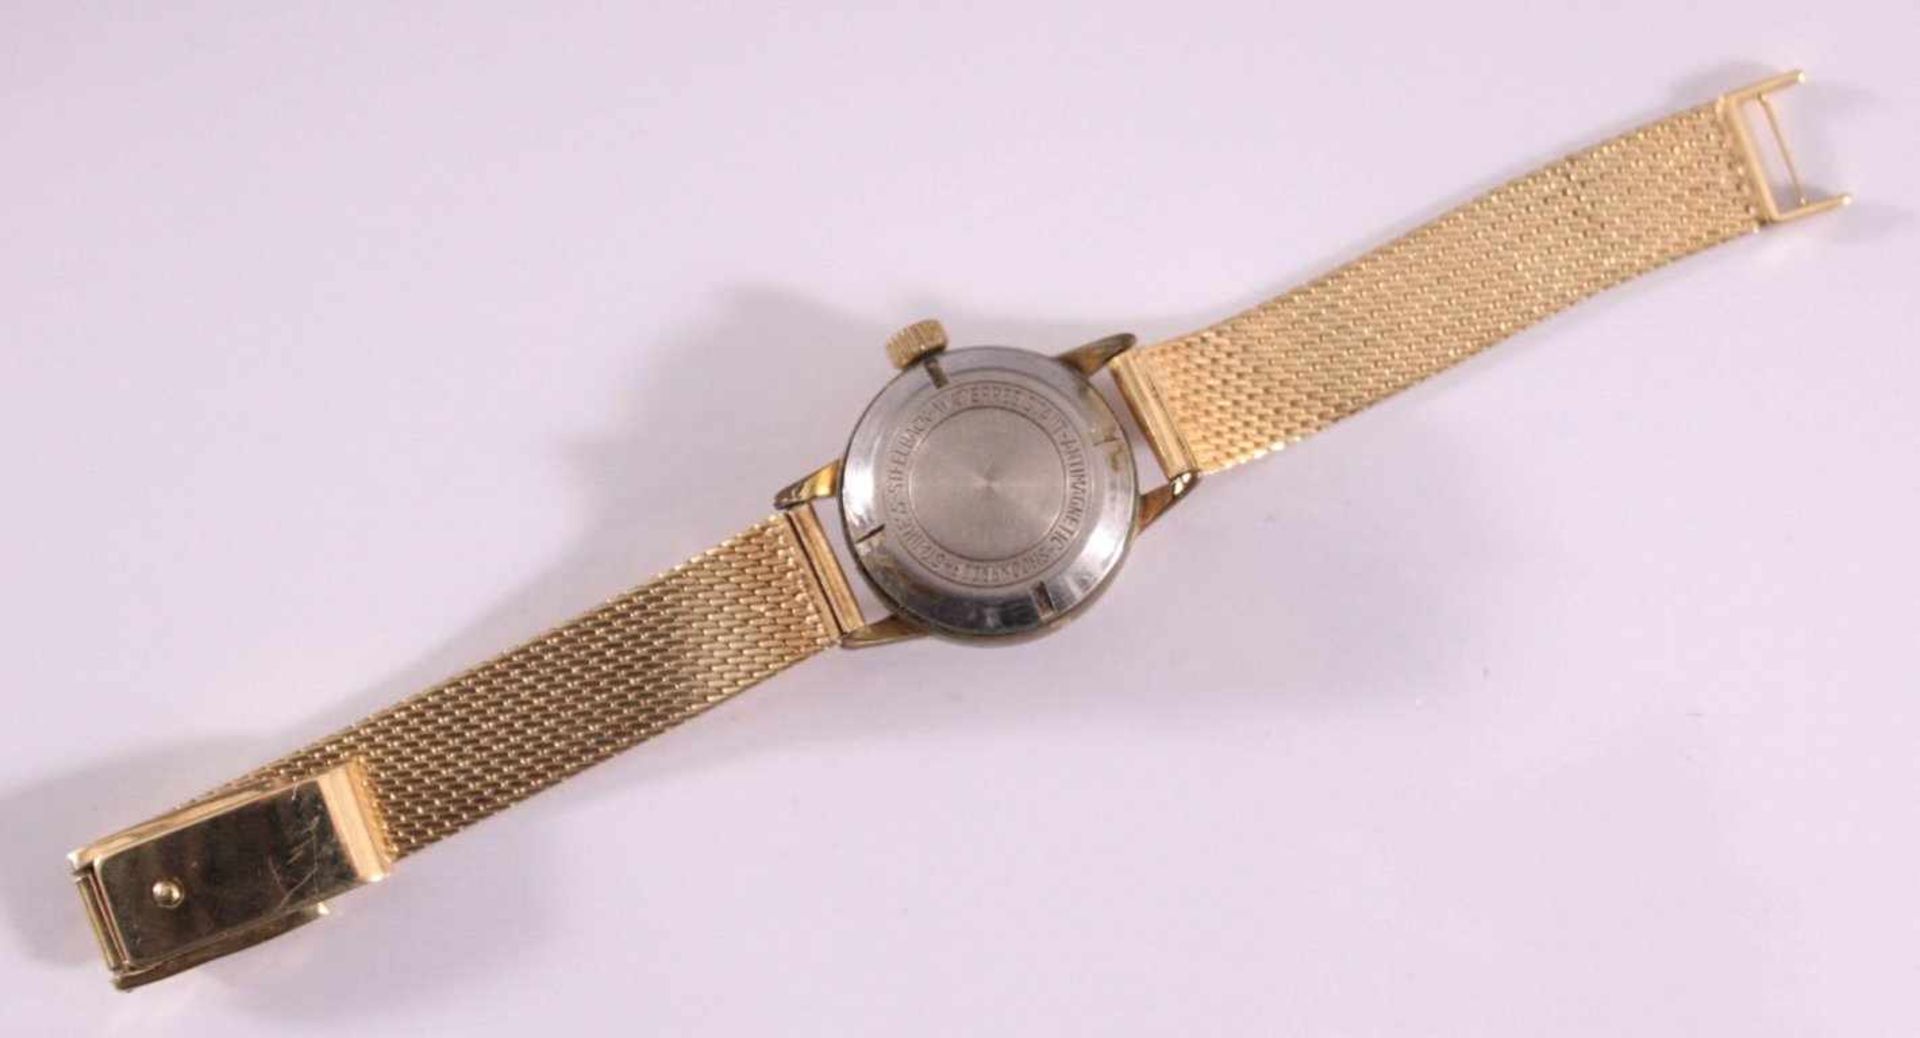 DamenarmbanduhrLondon Incabloc, Uhrwerksgehäuse vergoldet, sehr starkberieben, Funktion geprüft. - Bild 3 aus 6